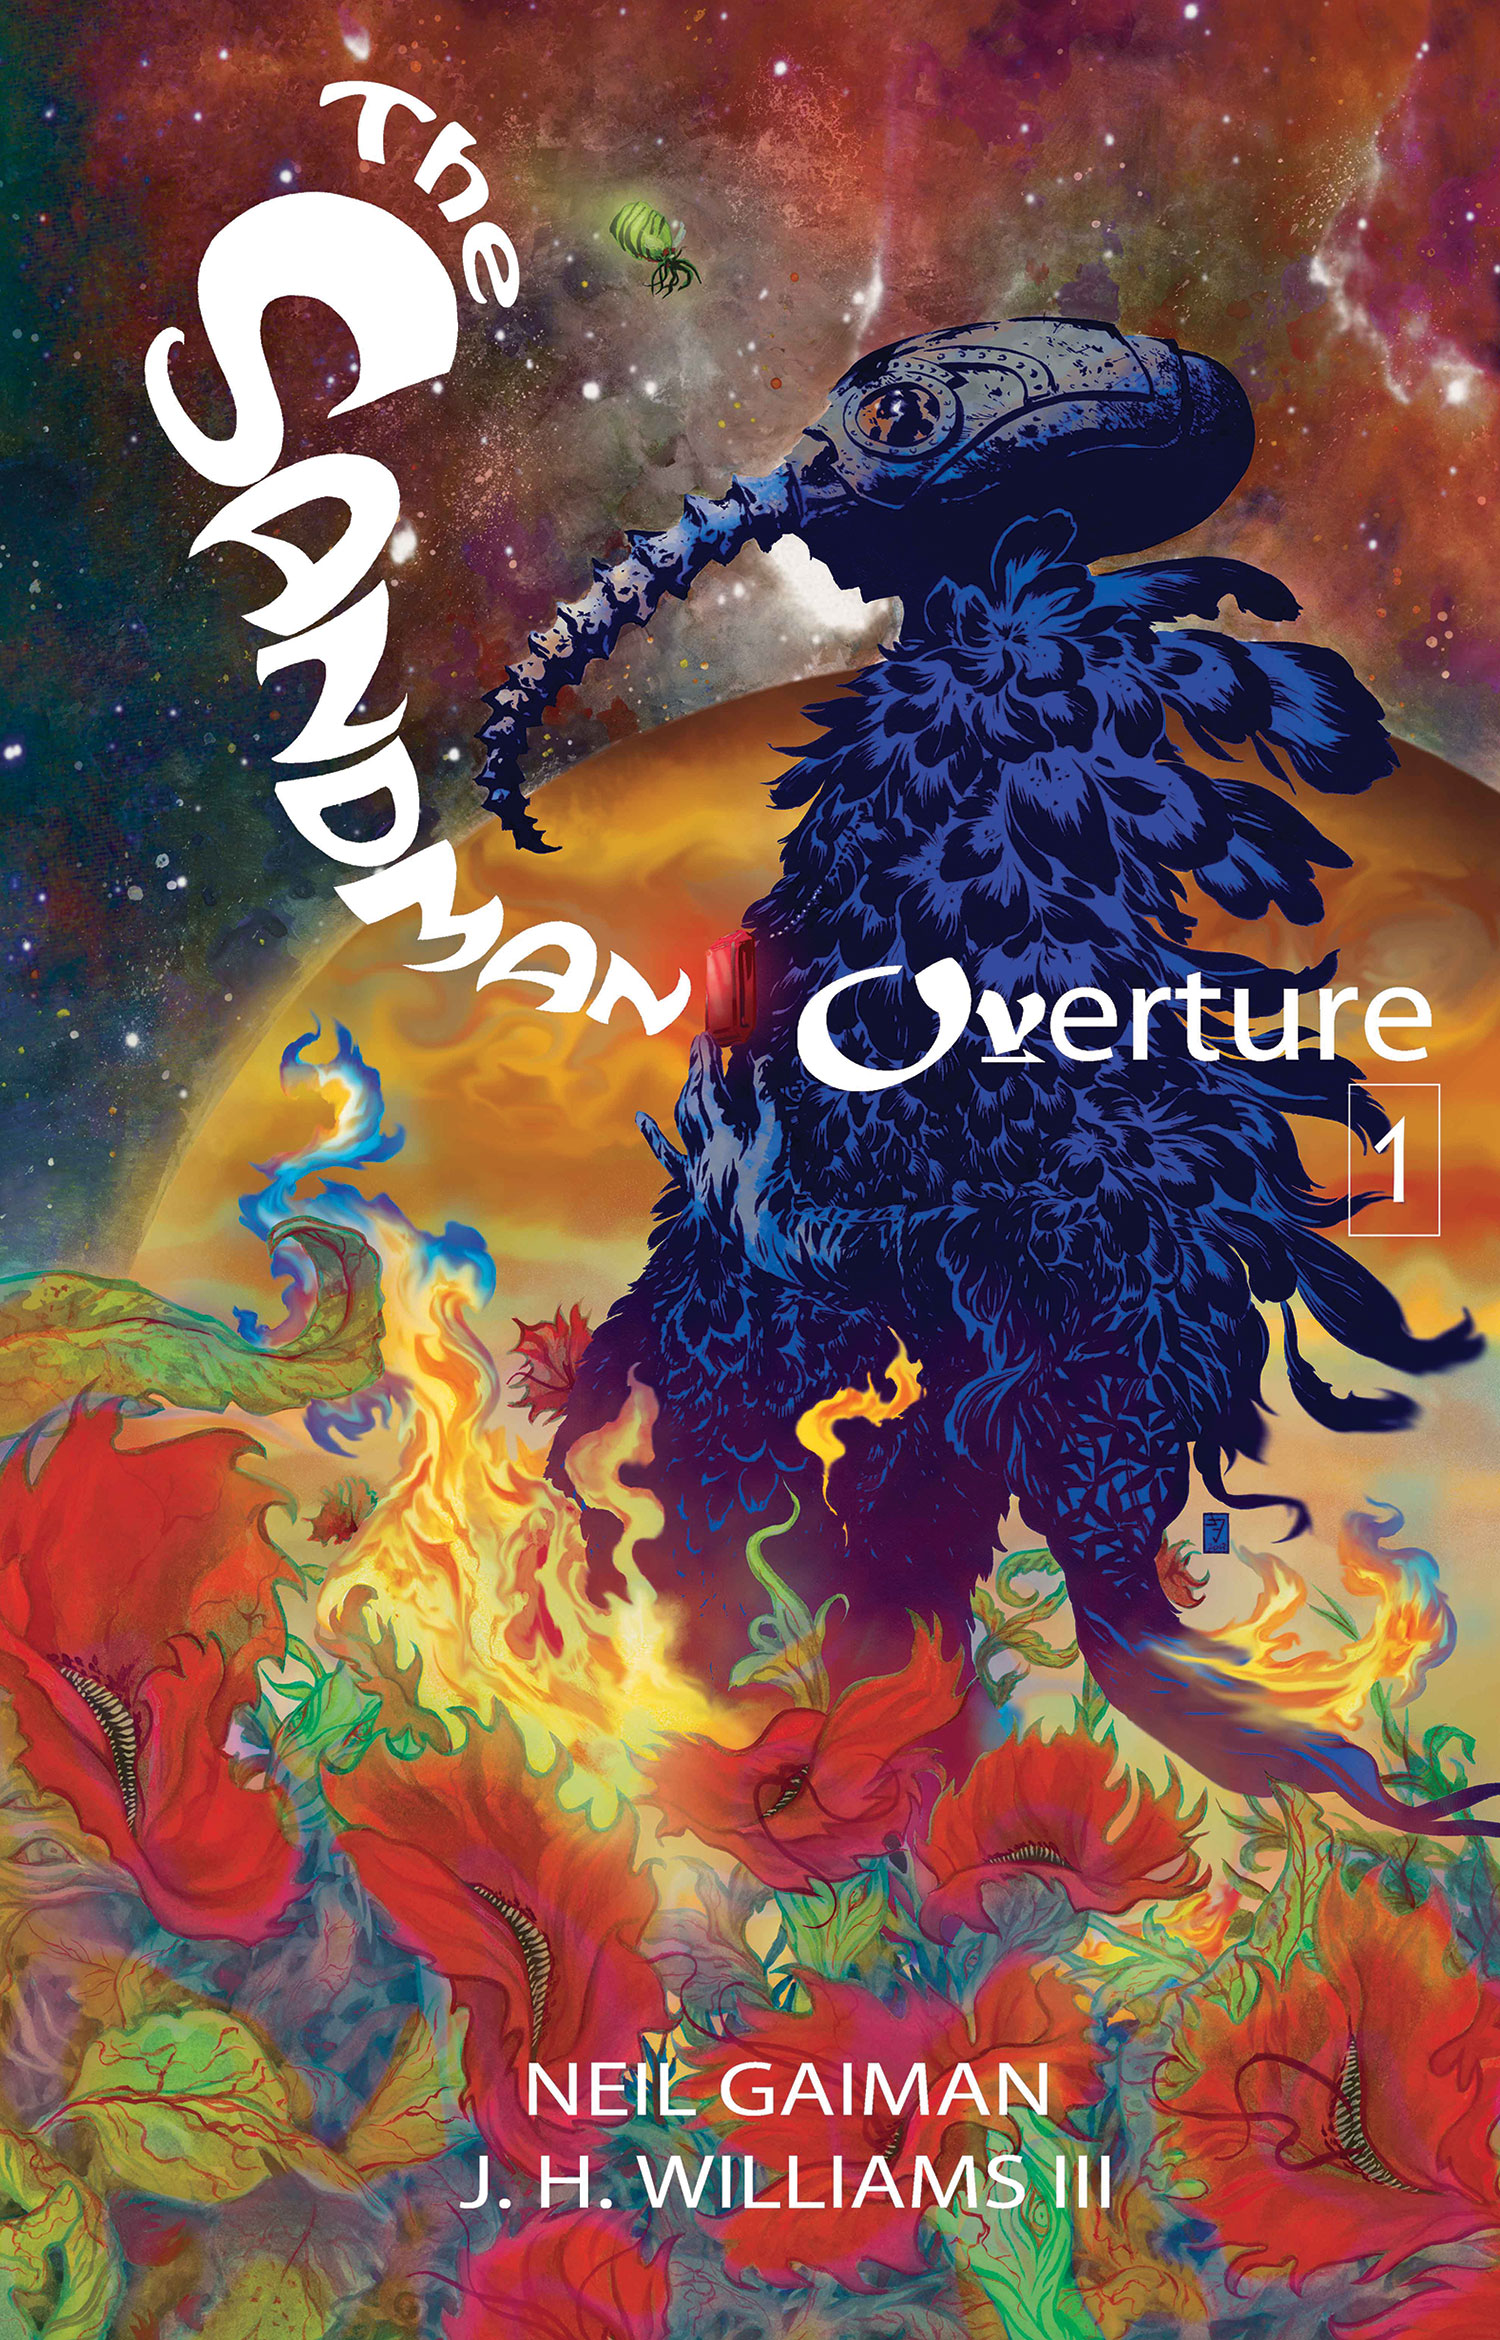 Sandman Overture by Neil Gaiman and J.H Williams III